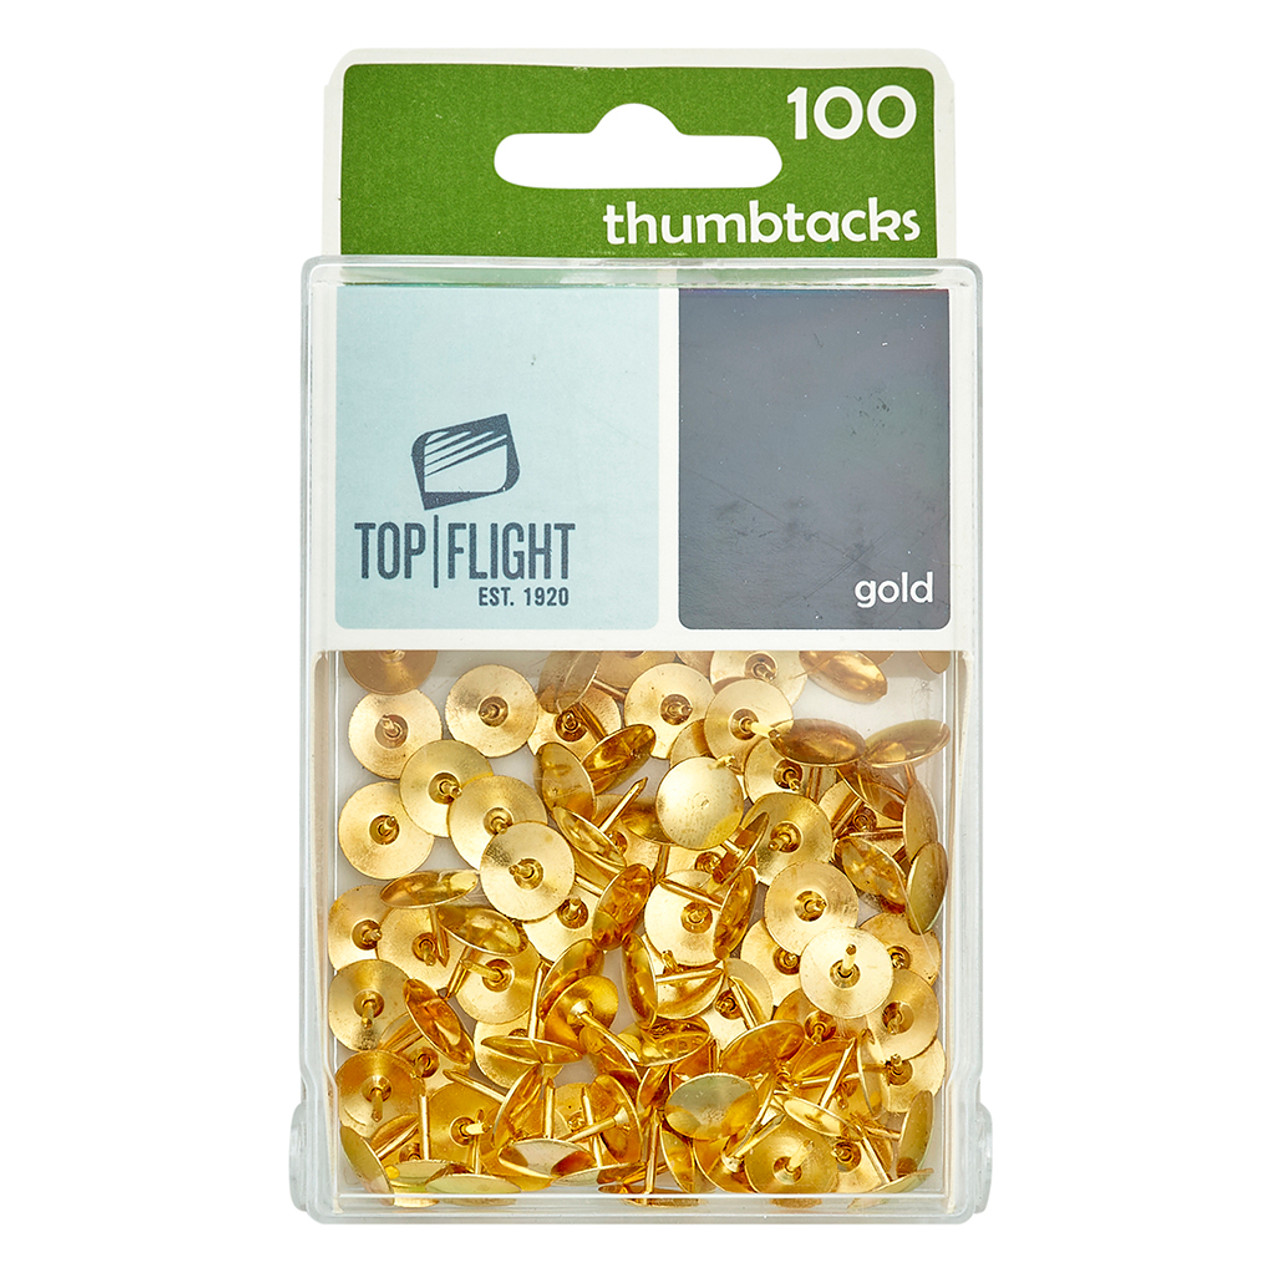 Thumb Tack 100 count, Gold